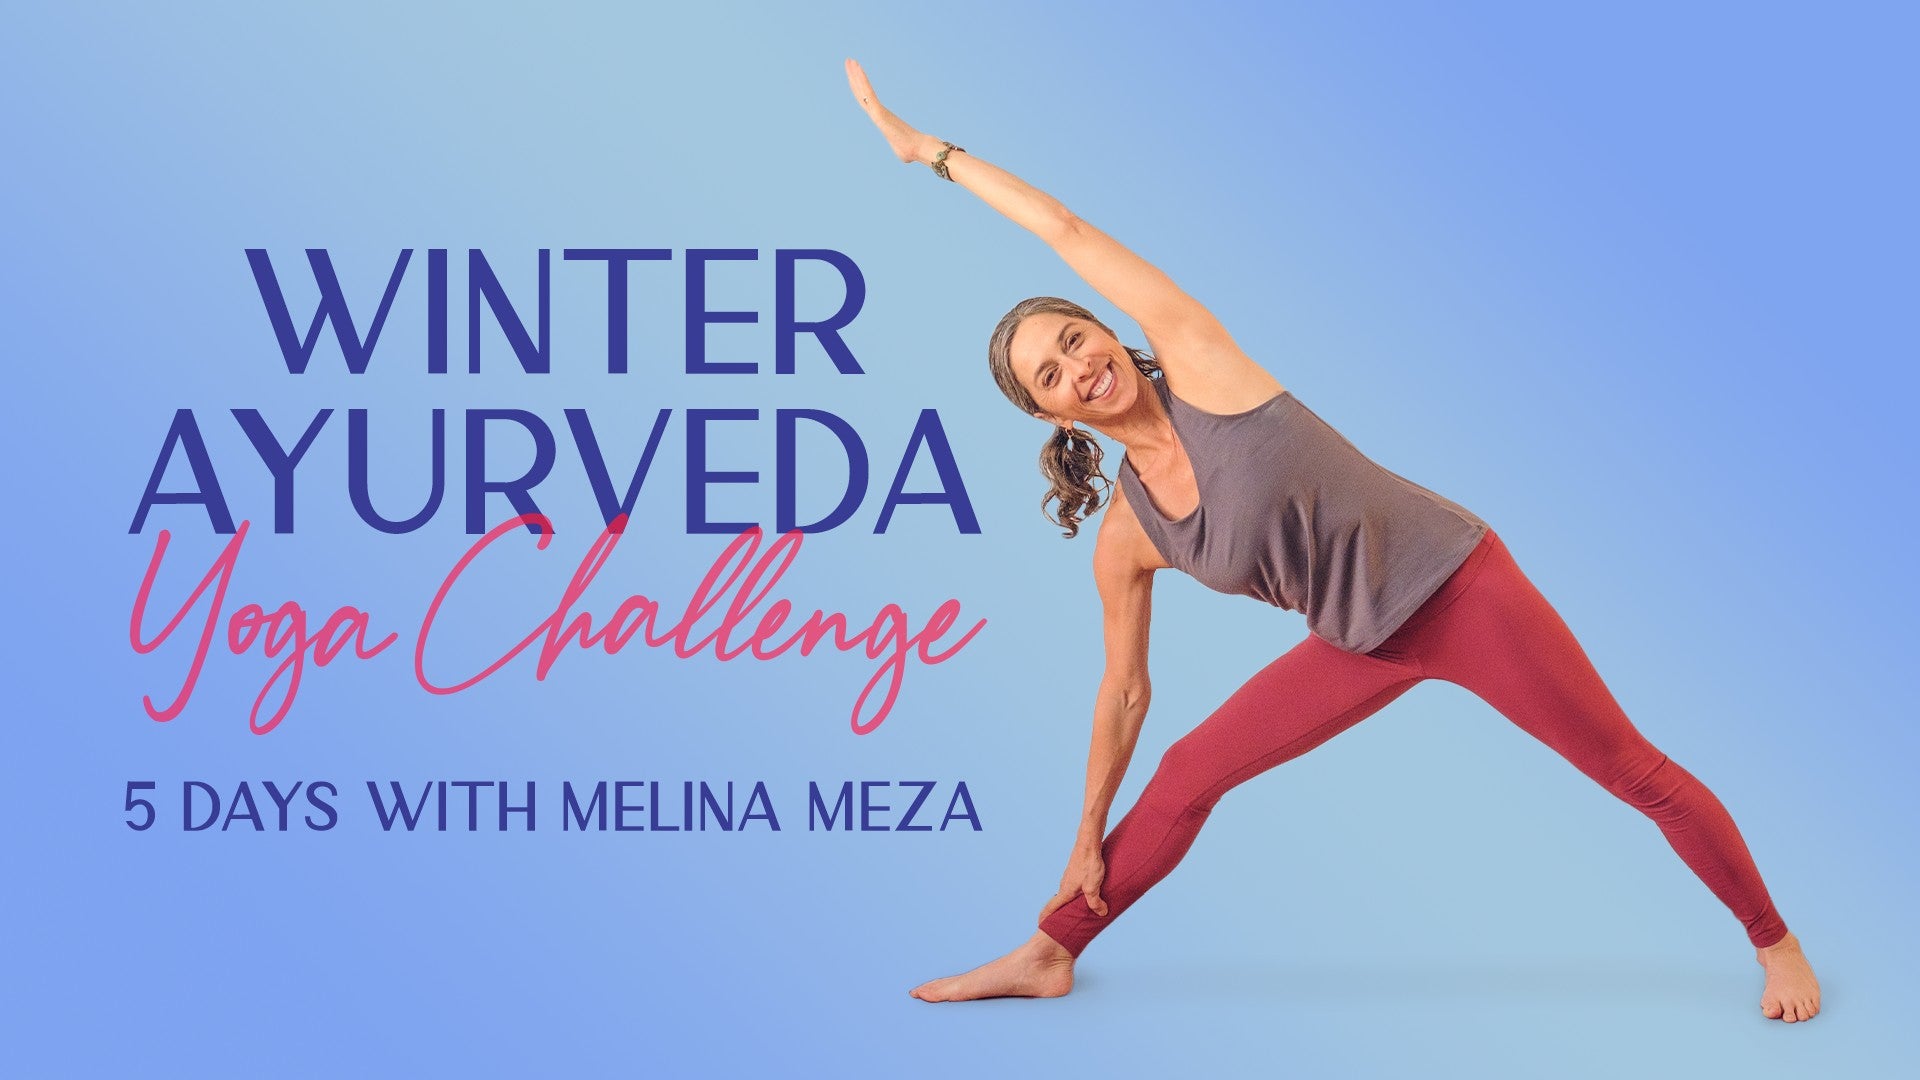 Winter Ayurveda Yoga Challenge Artwork